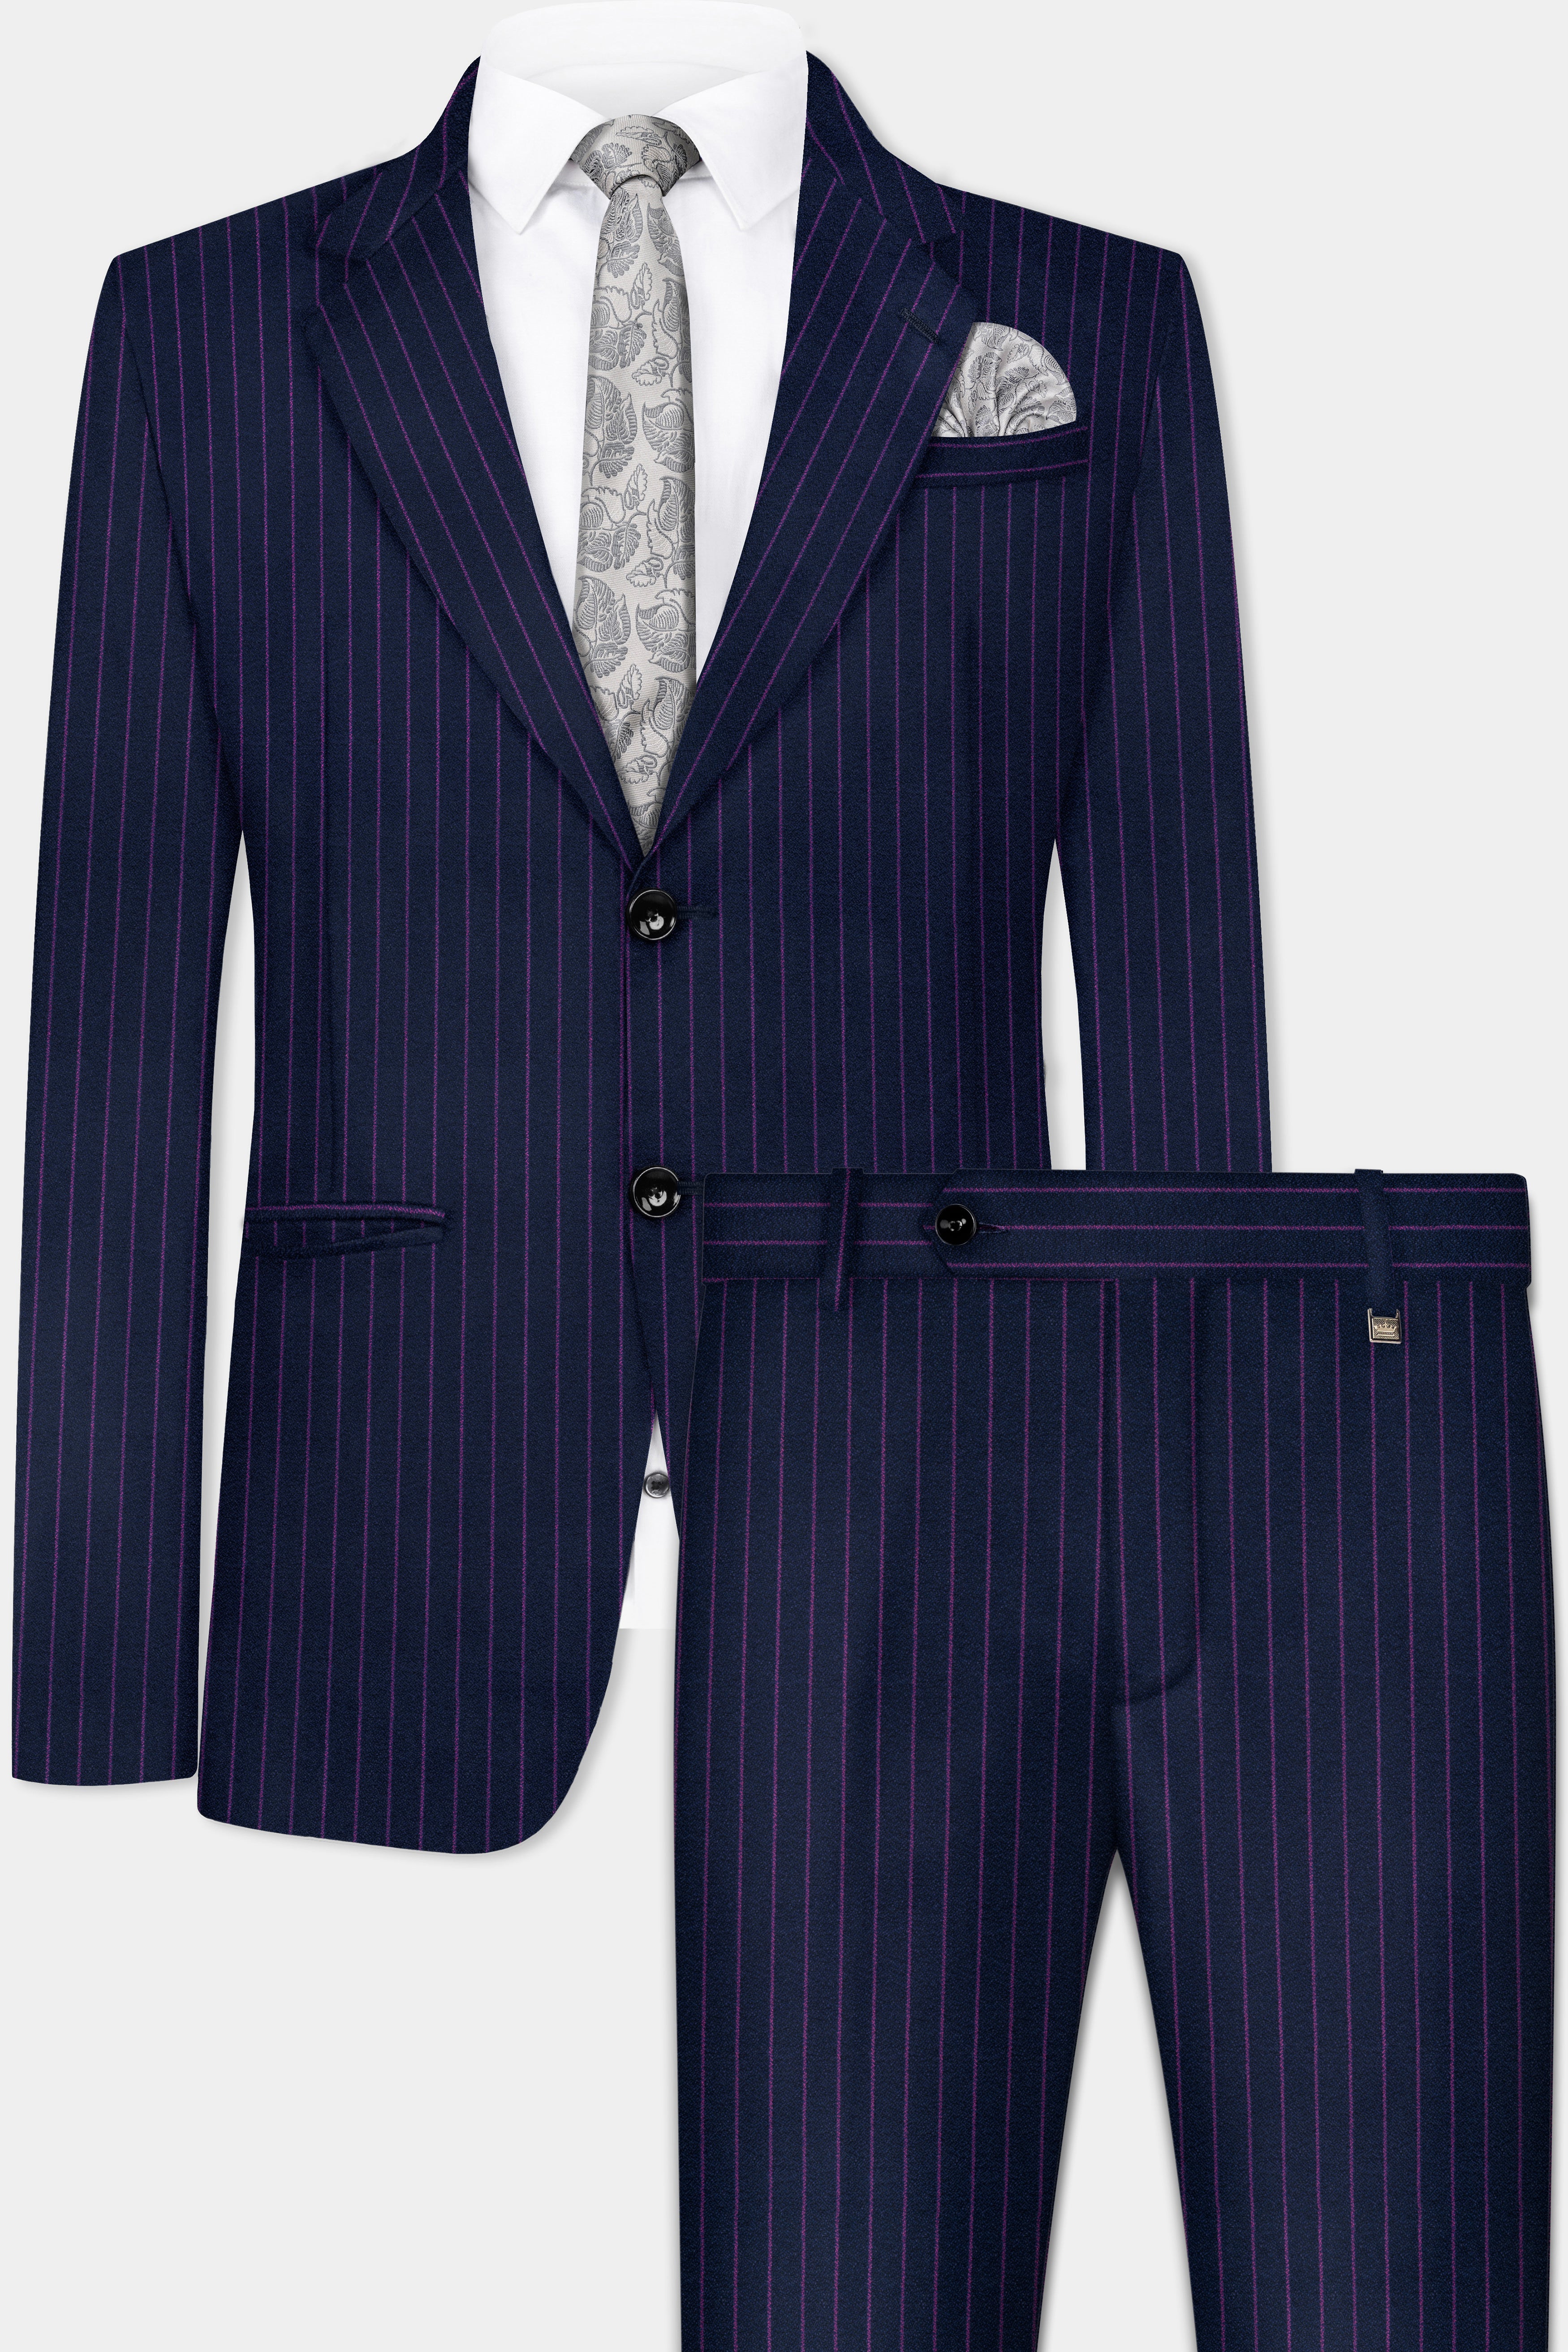 Steel Gray with Grape Purple Striped Wool Blend Suit